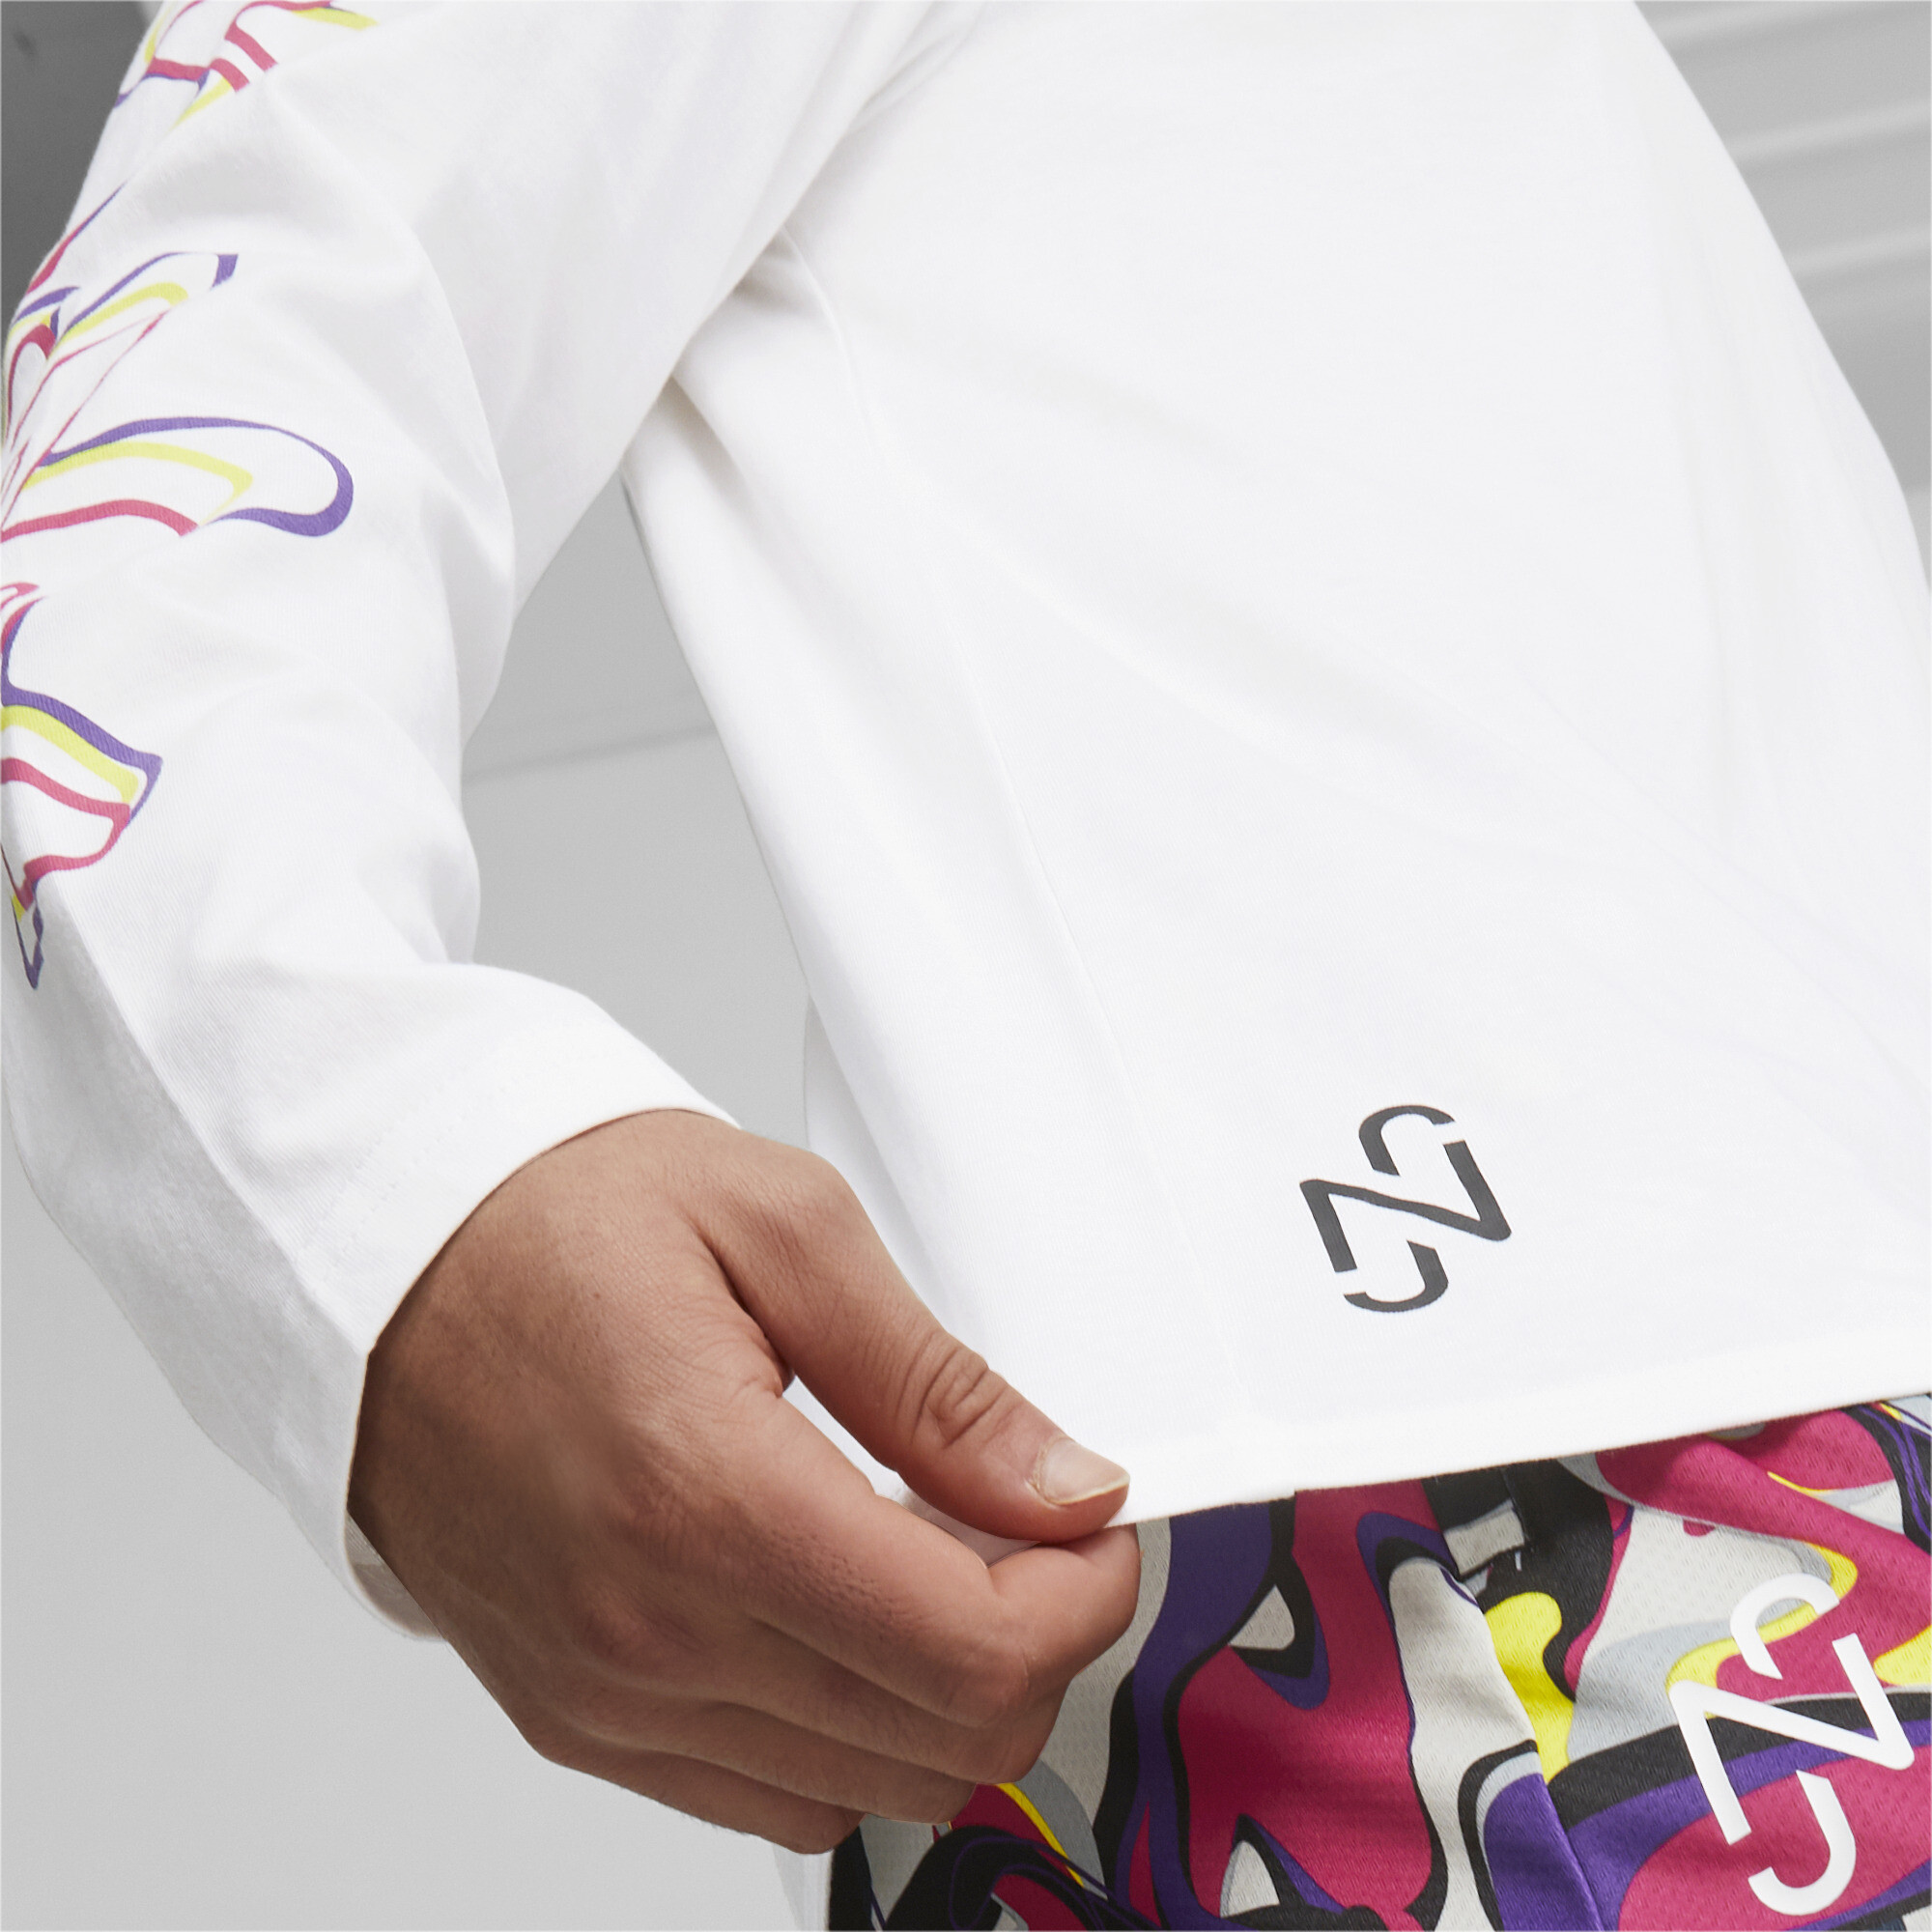 Men's Puma Neymar Jr Creativity Long Sleeve T-Shirt, White, Size XS, Clothing